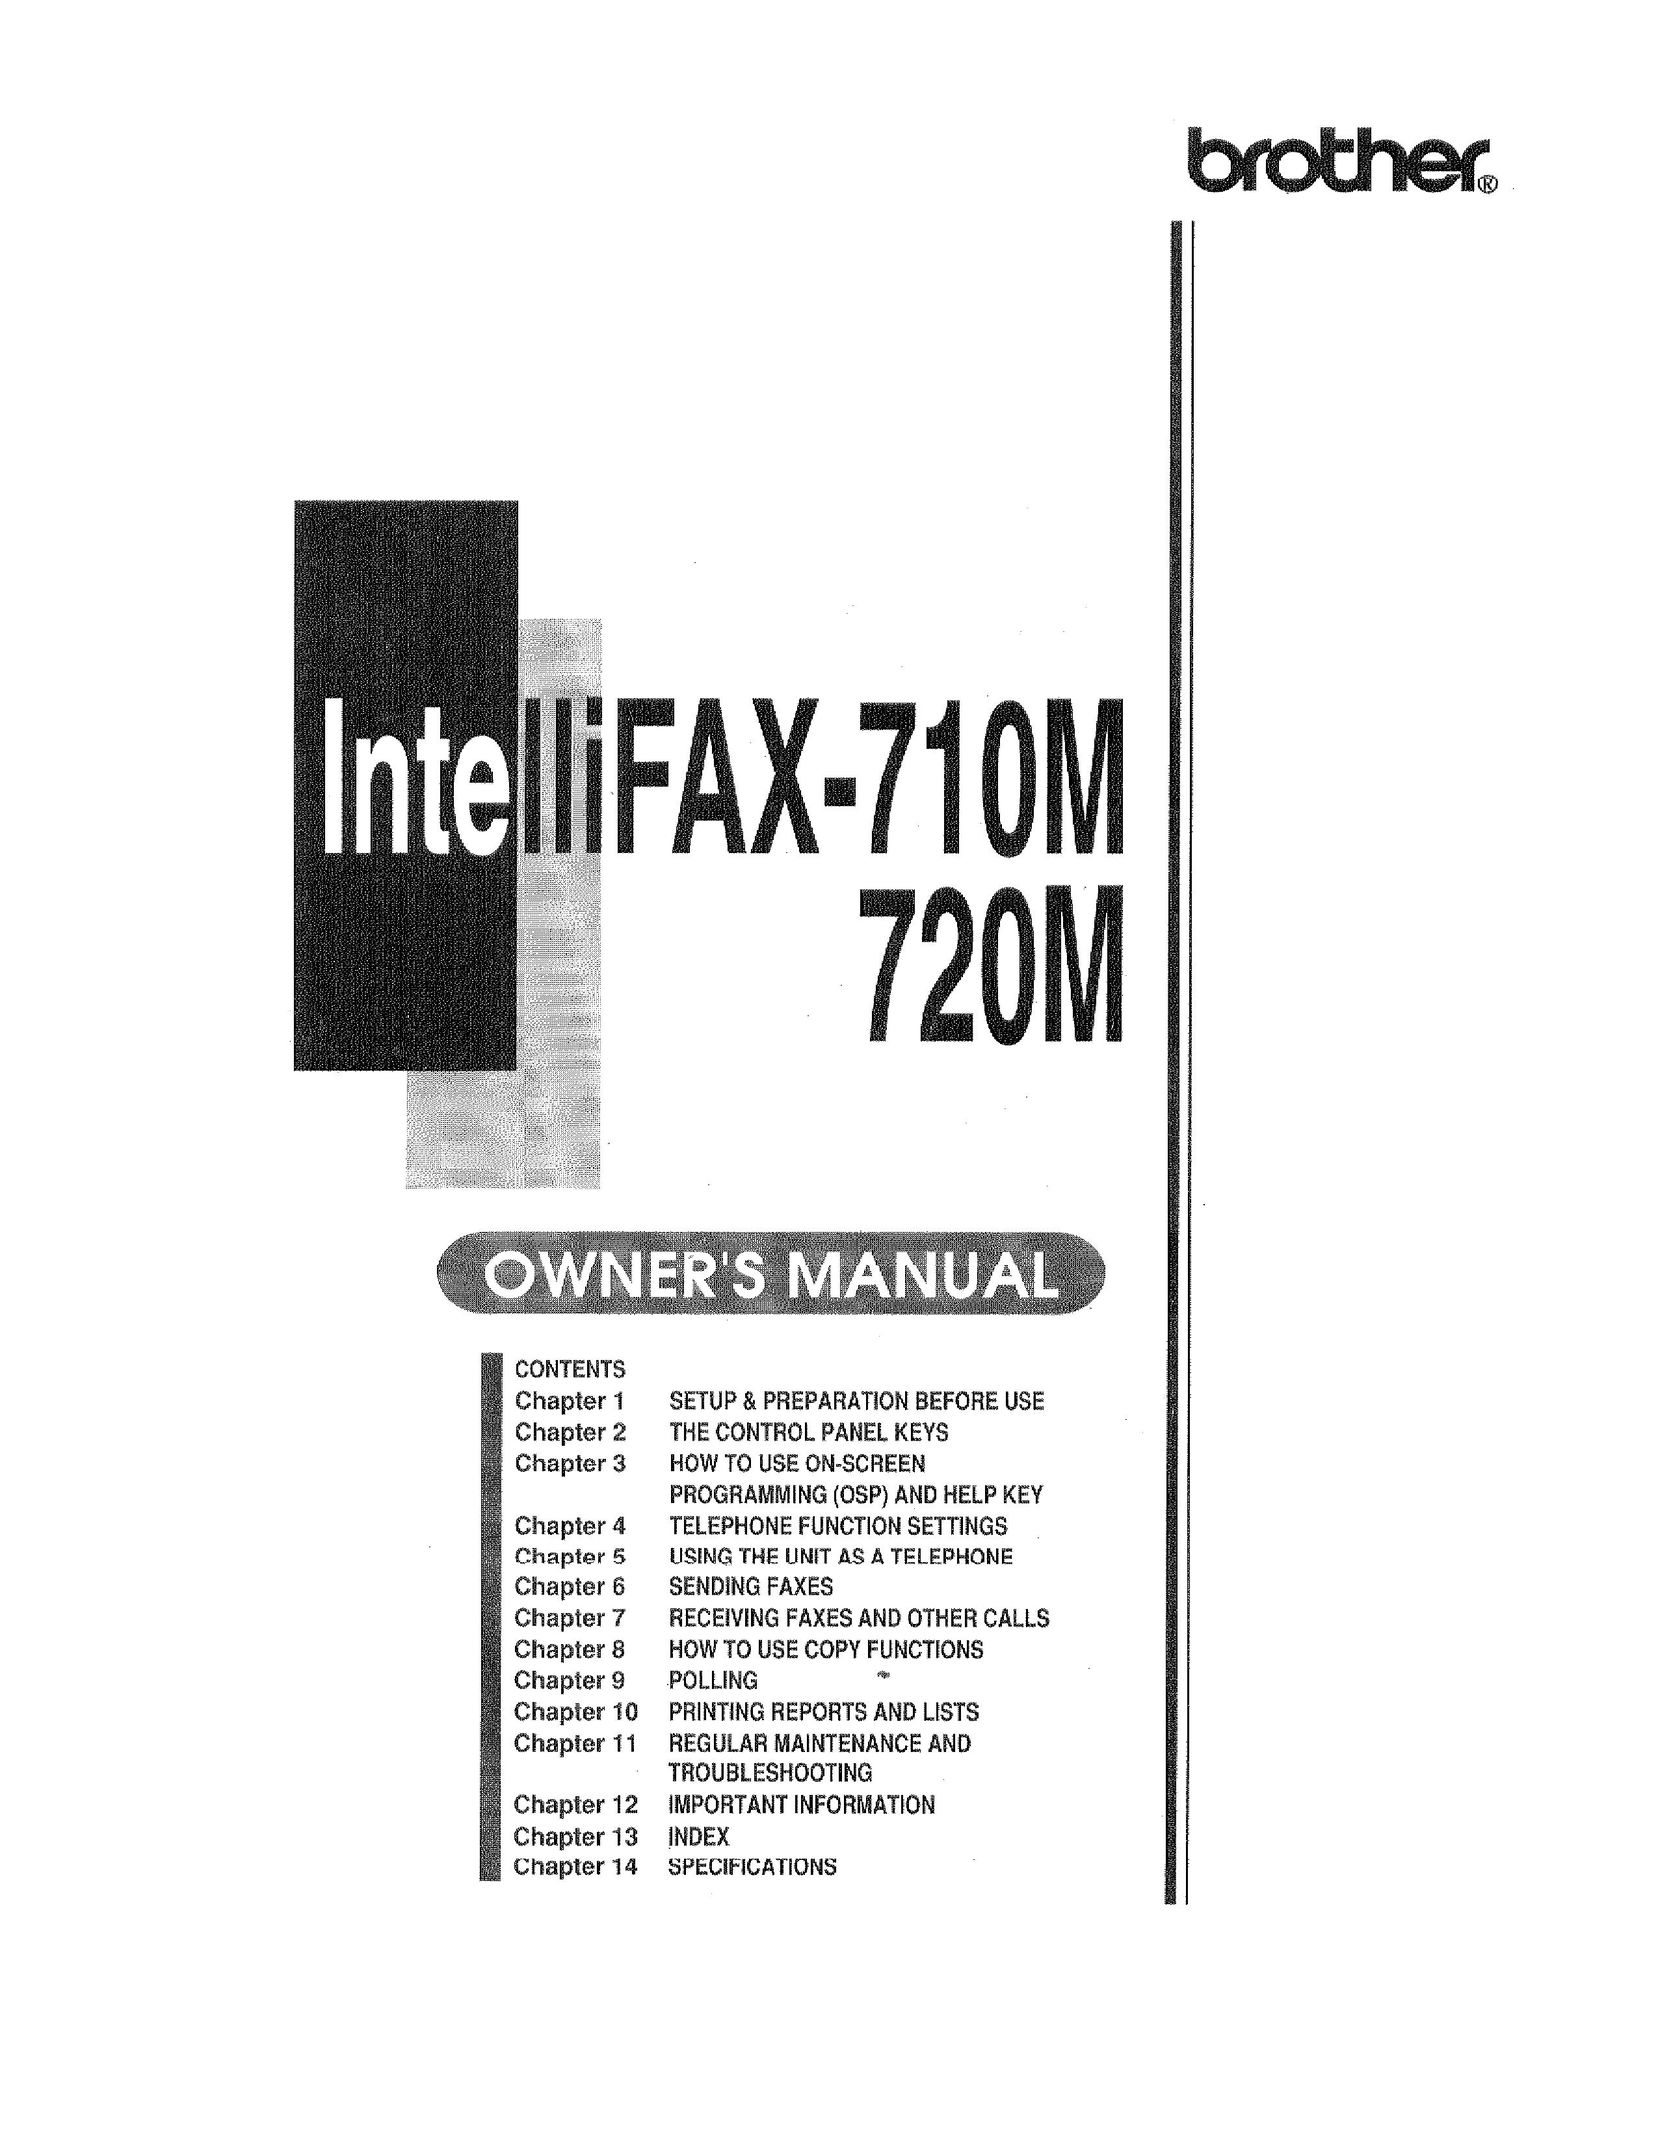 Brother 710M Fax Machine User Manual